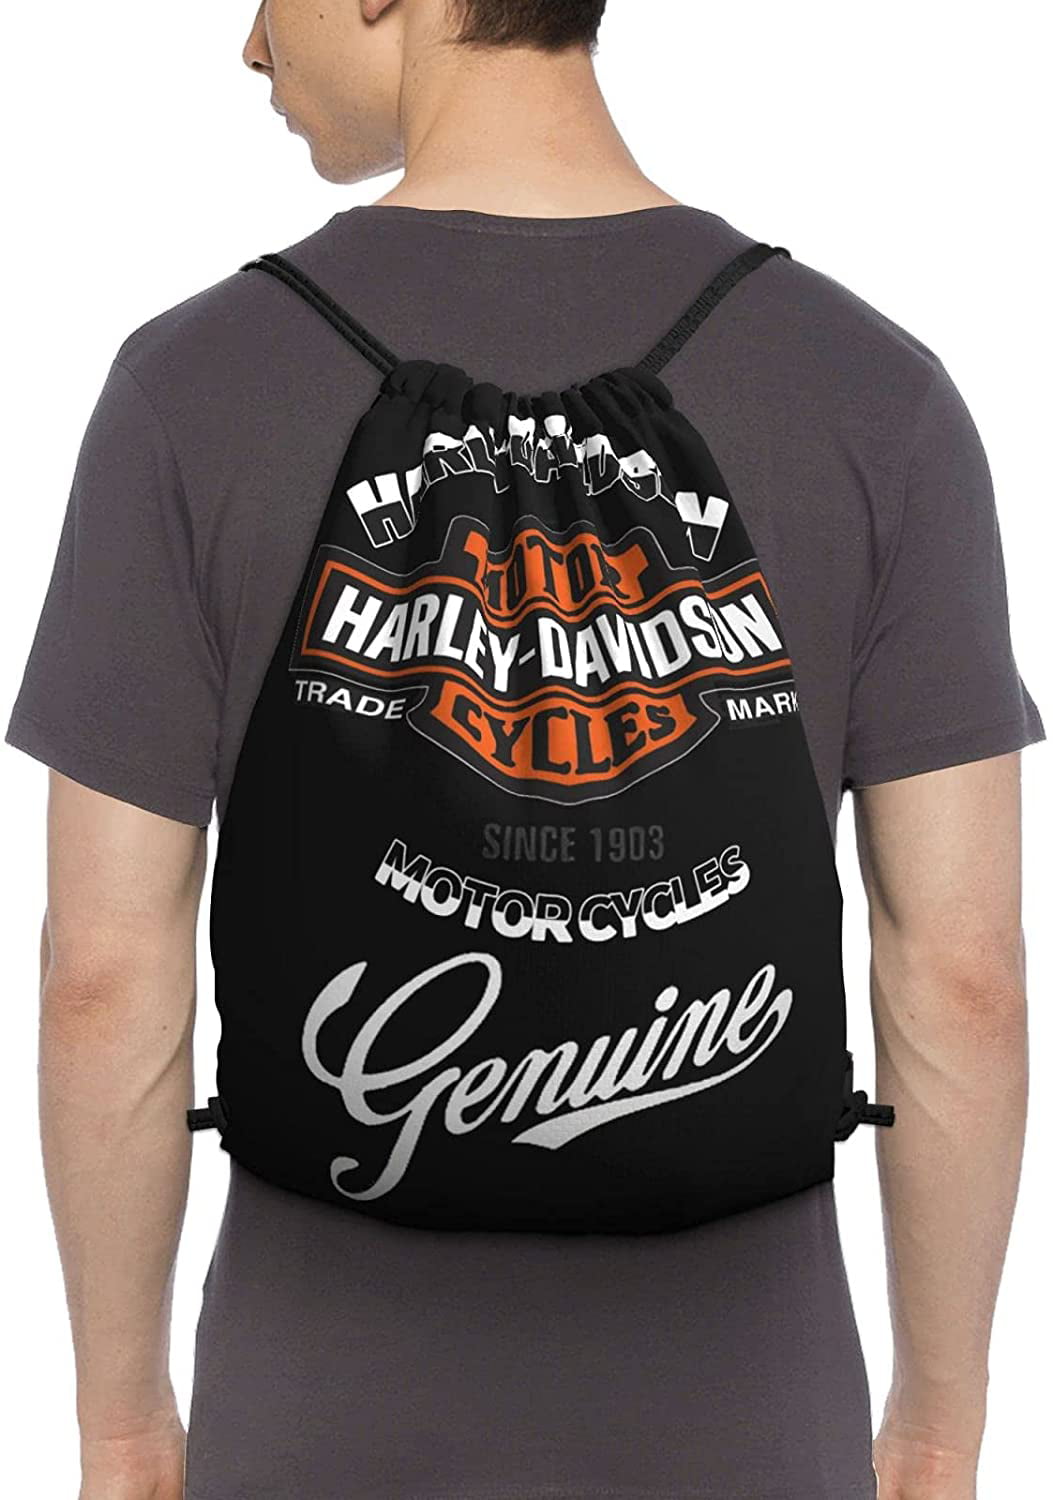 Harley Davidson Art Drawstring Backpack Storage Bag Water Resistant Nylon for Gym 14in16in